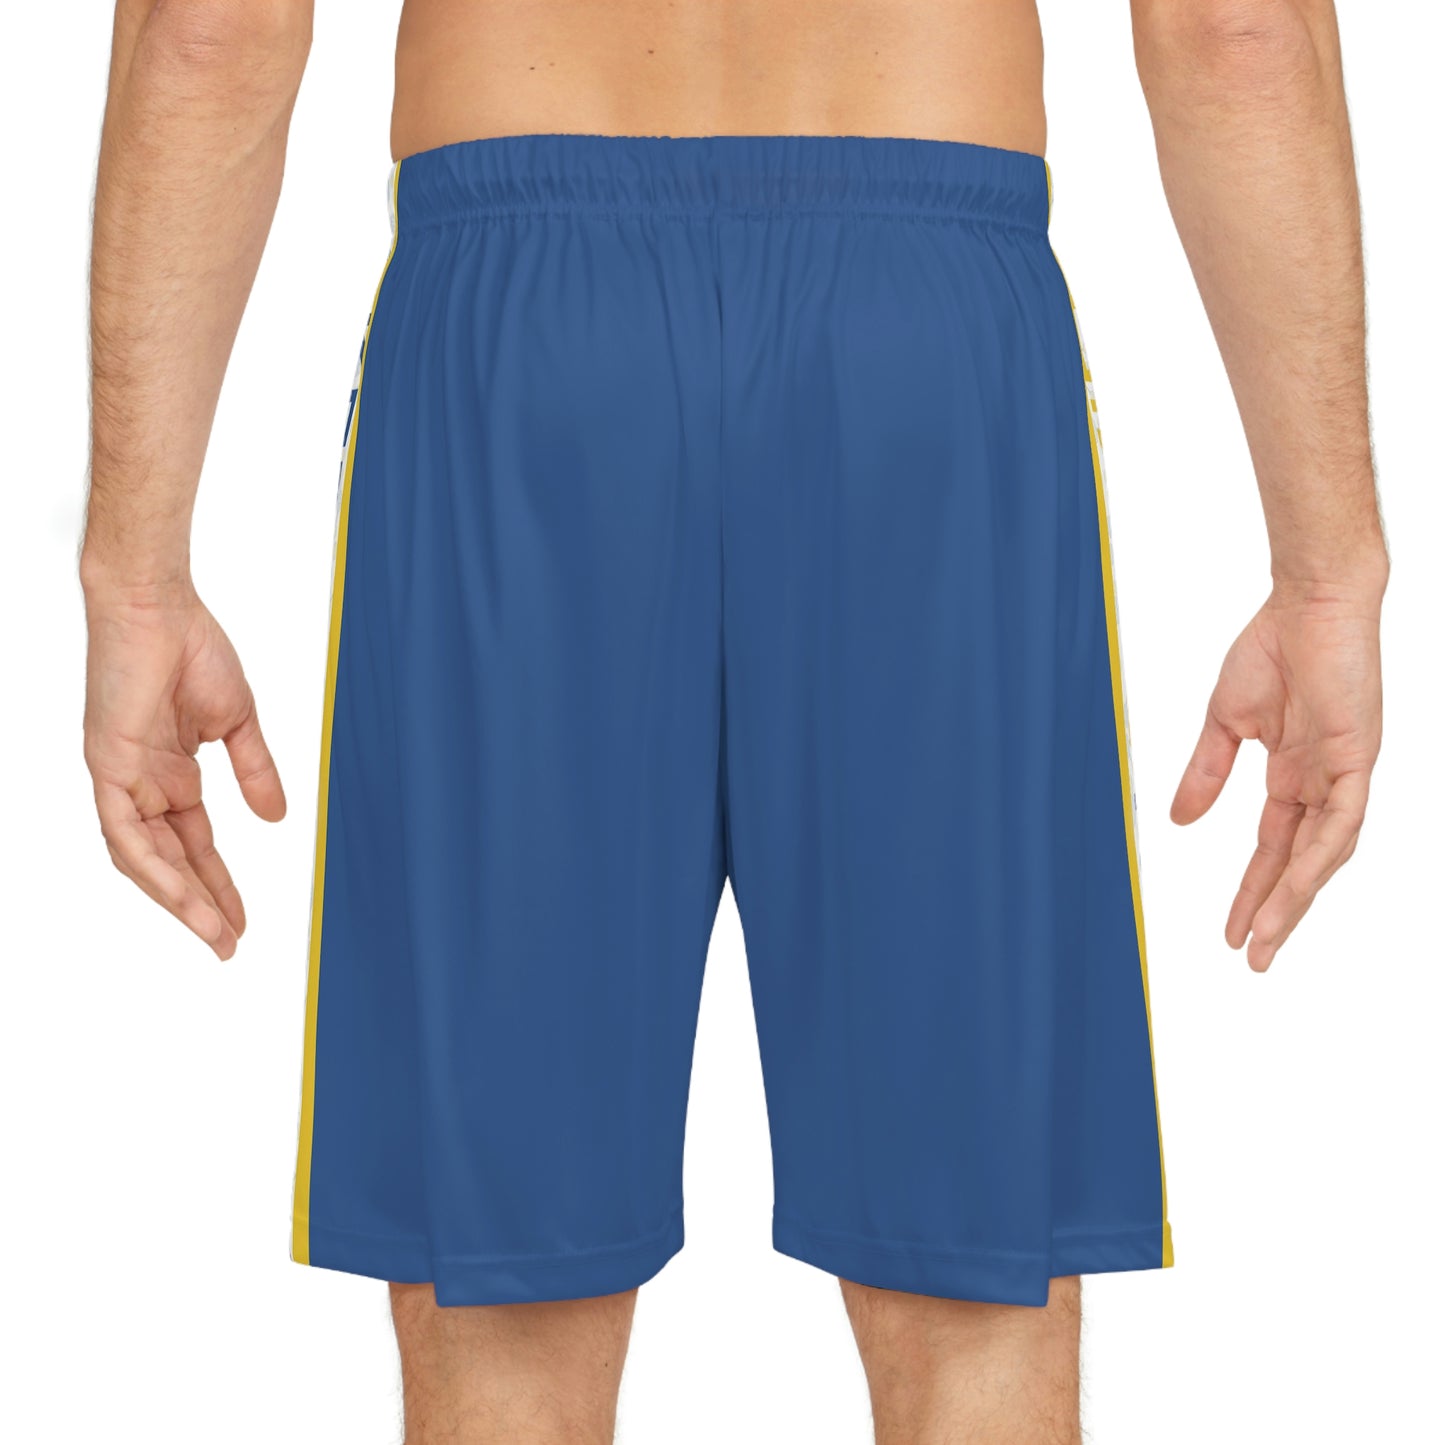 Kern Premier - Blue and Gold - Basketball Shorts